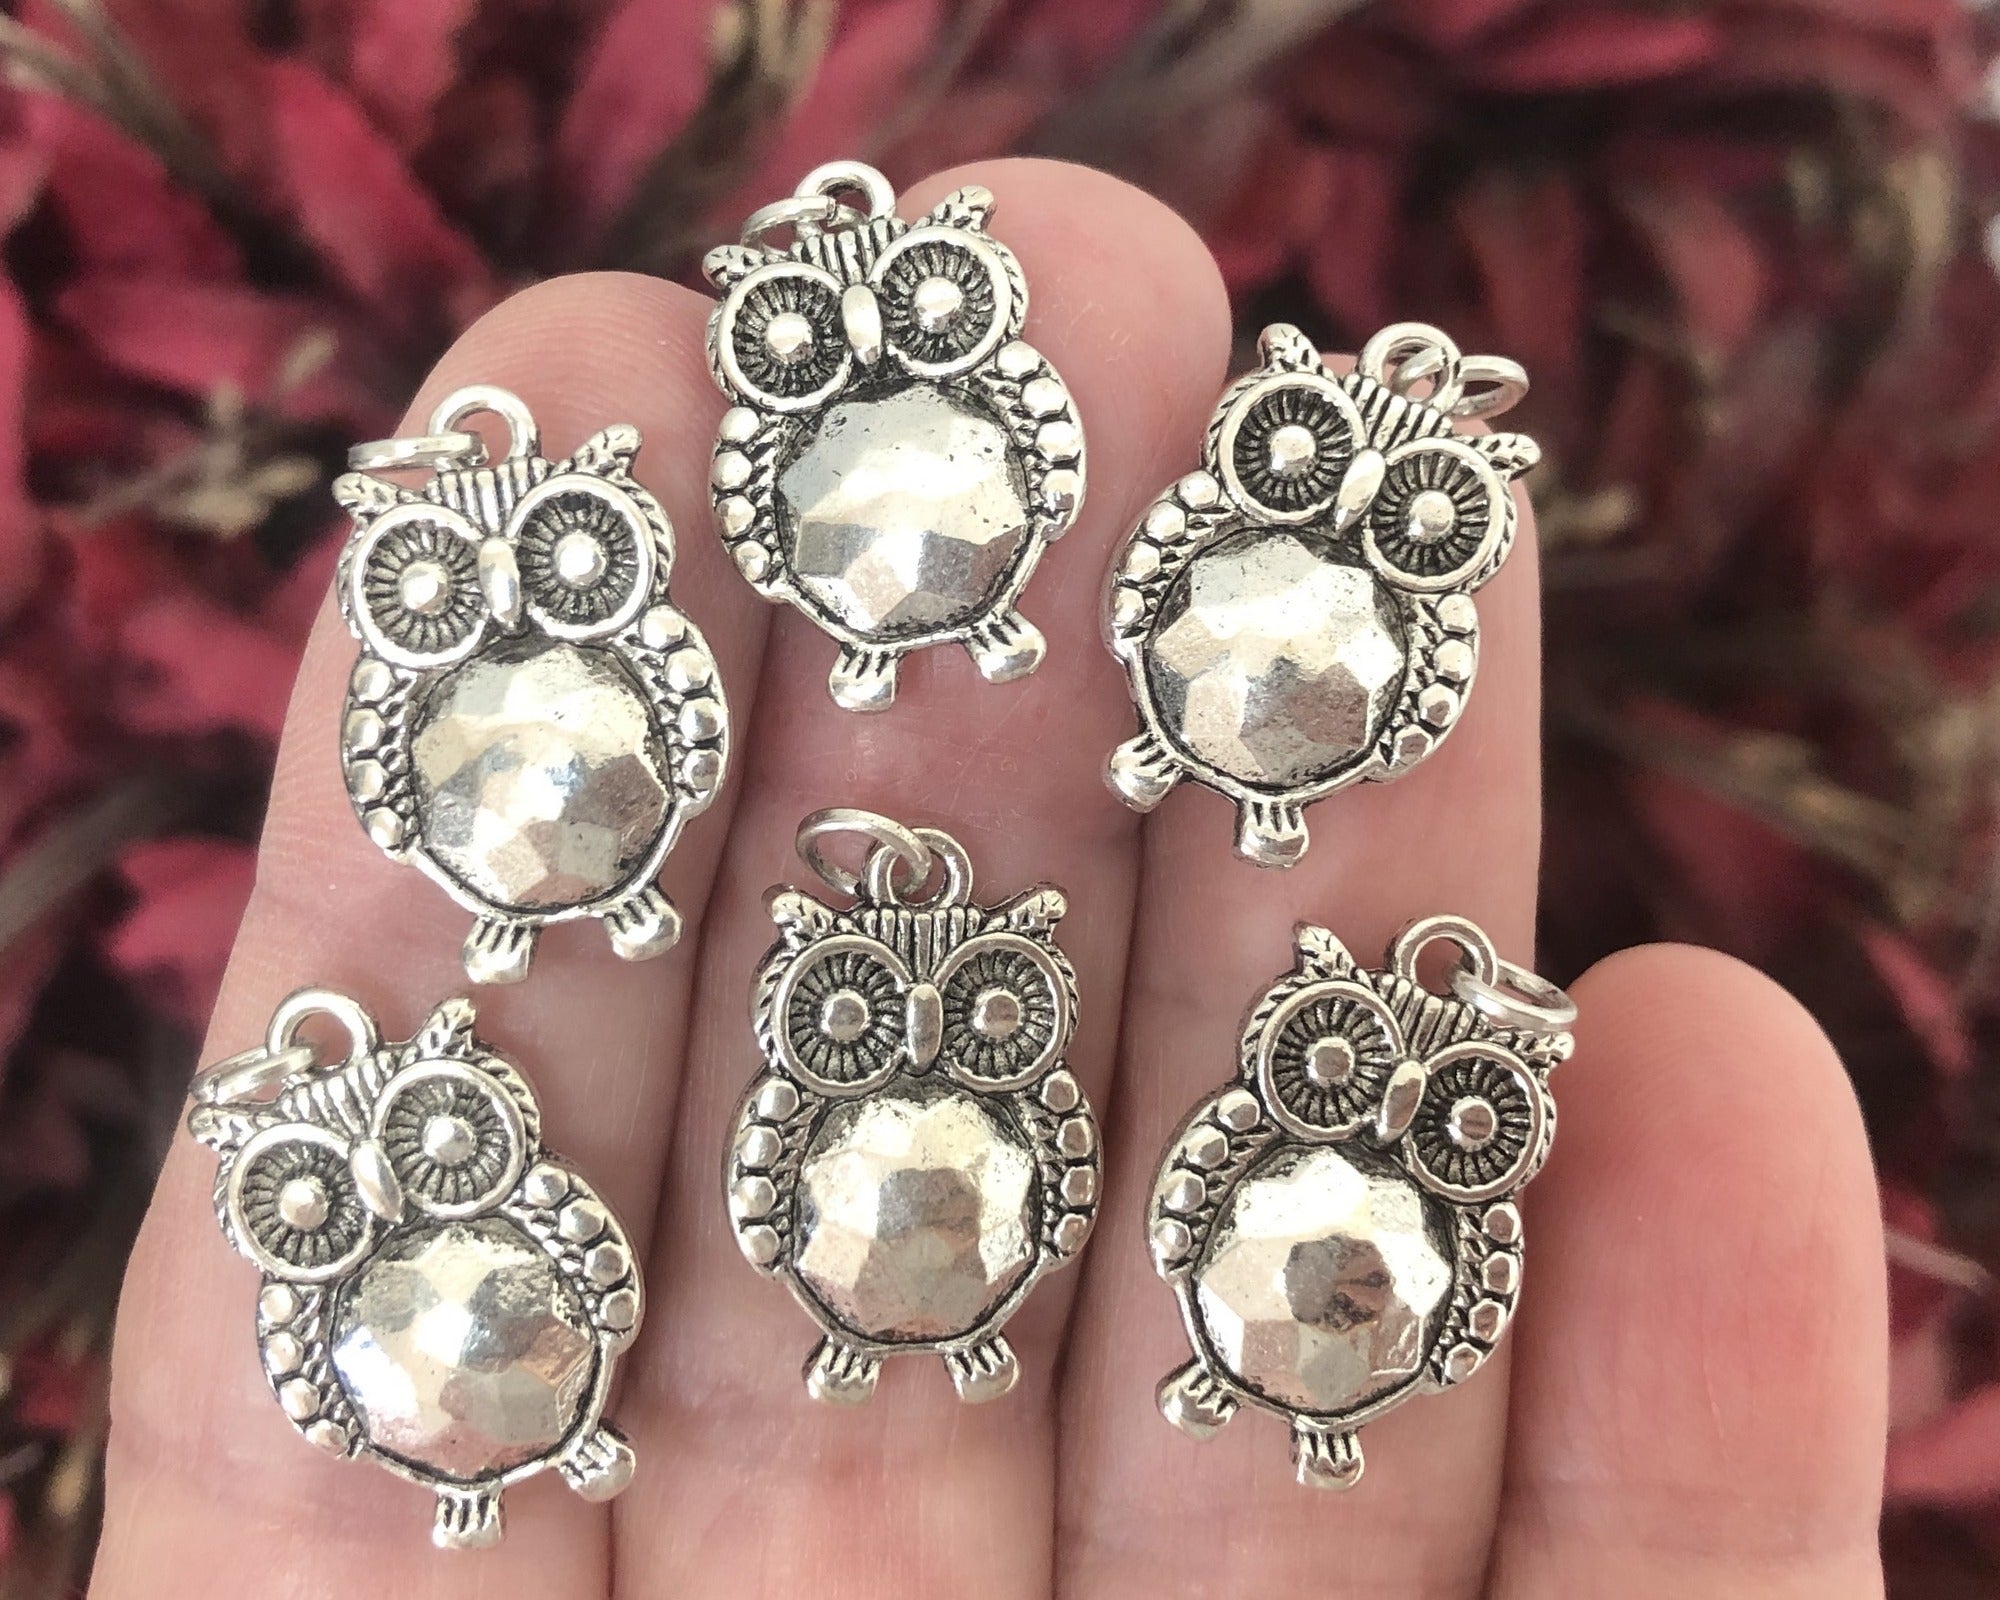 Owl charm 20x14mm antique silver metal alloy pendant